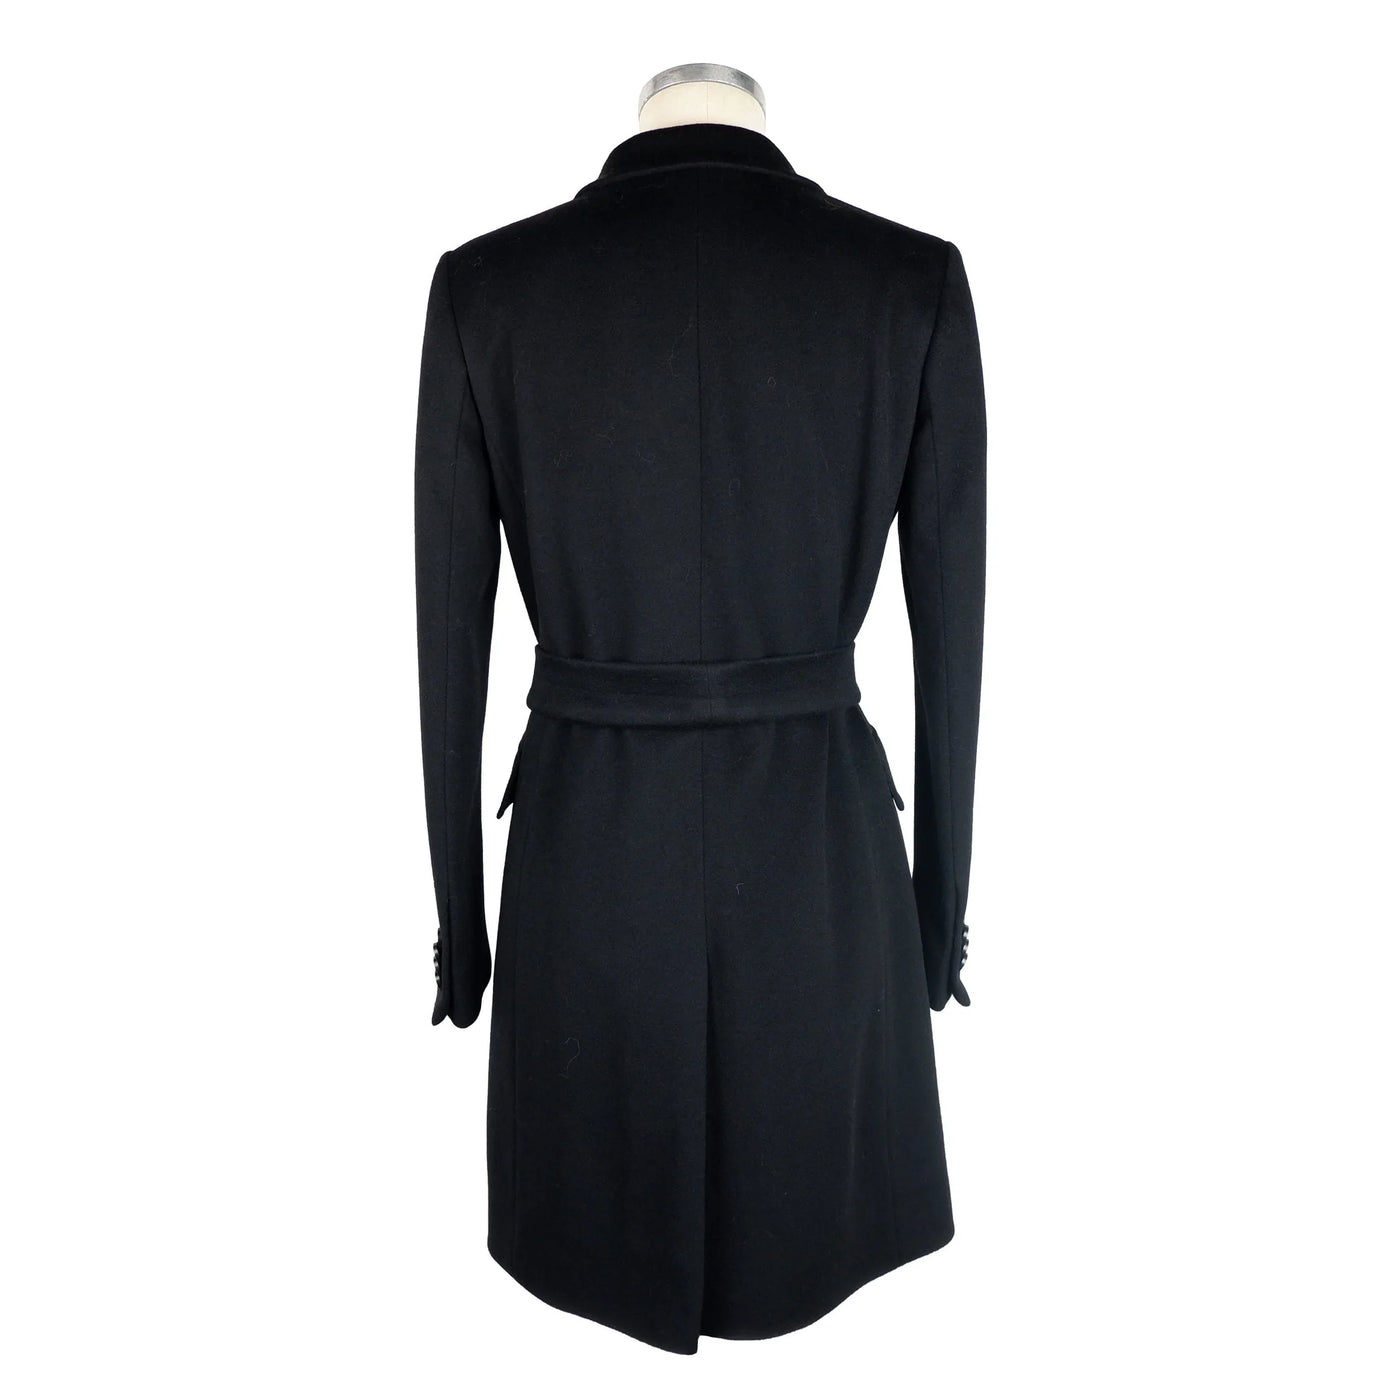 Made in Italy Black Wool Jackets & Coat Black, feed-1, IT40|S, IT46 | L, Jackets & Coats - Women - Clothing, Made in Italy at SEYMAYKA